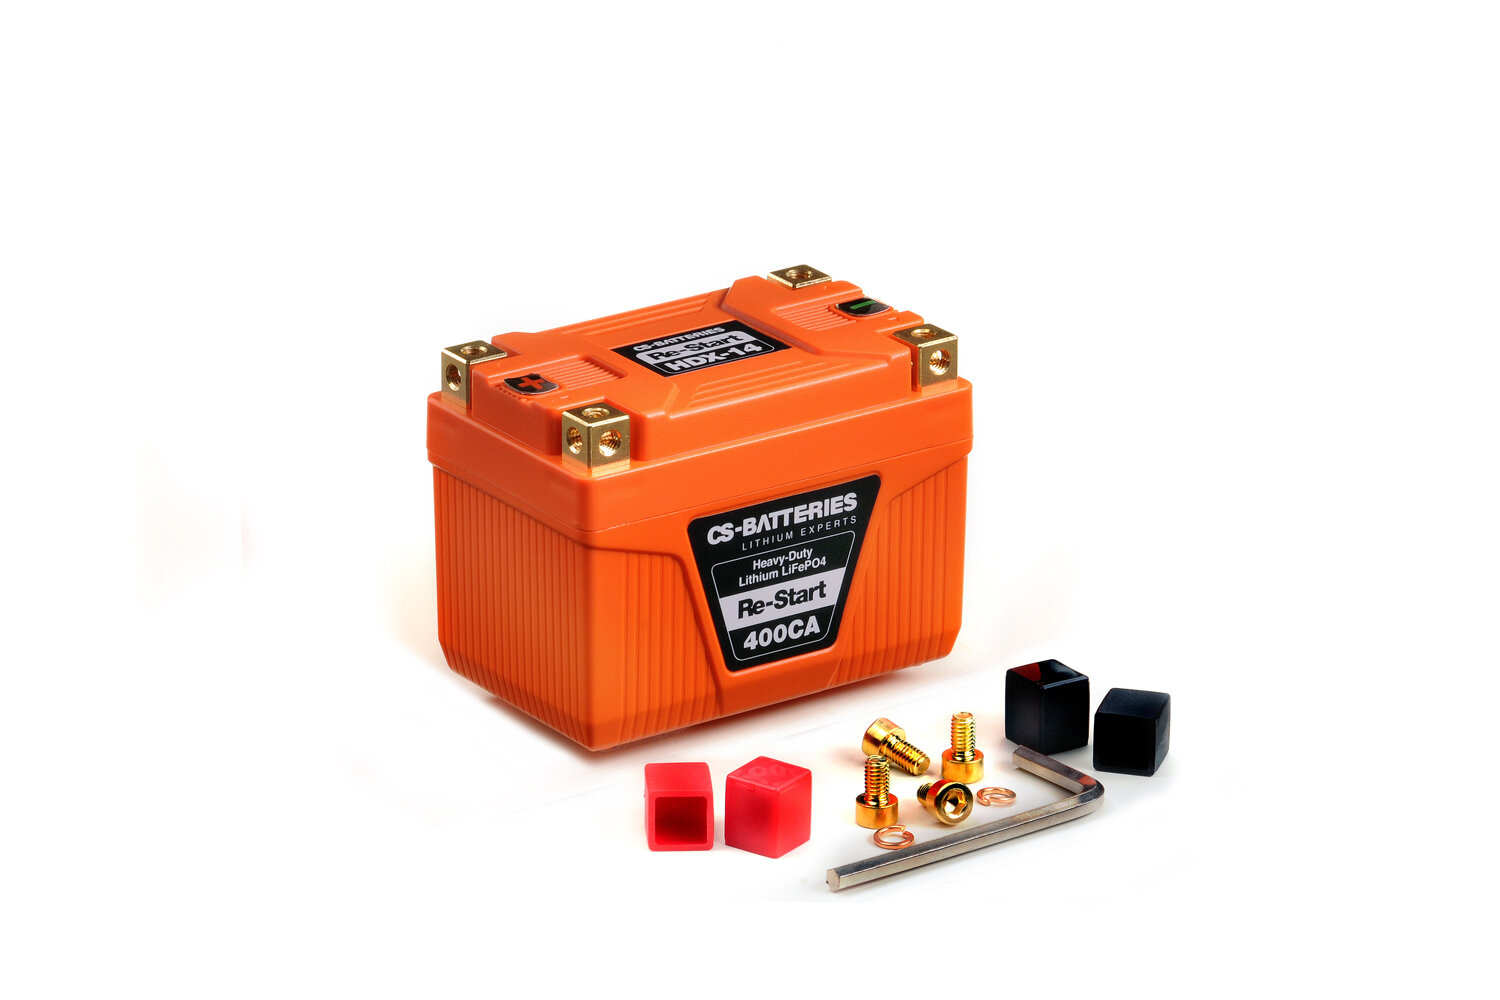 https://cs-batteries.de/media/image/product/39908/lg/hdx-14_128v-lithium-5ah-64wh-heavy-duty-hdx-14-re-start-starterbatterie-400ca-l113b70h83mm-750g-pbeq-5-14ah~2.jpg